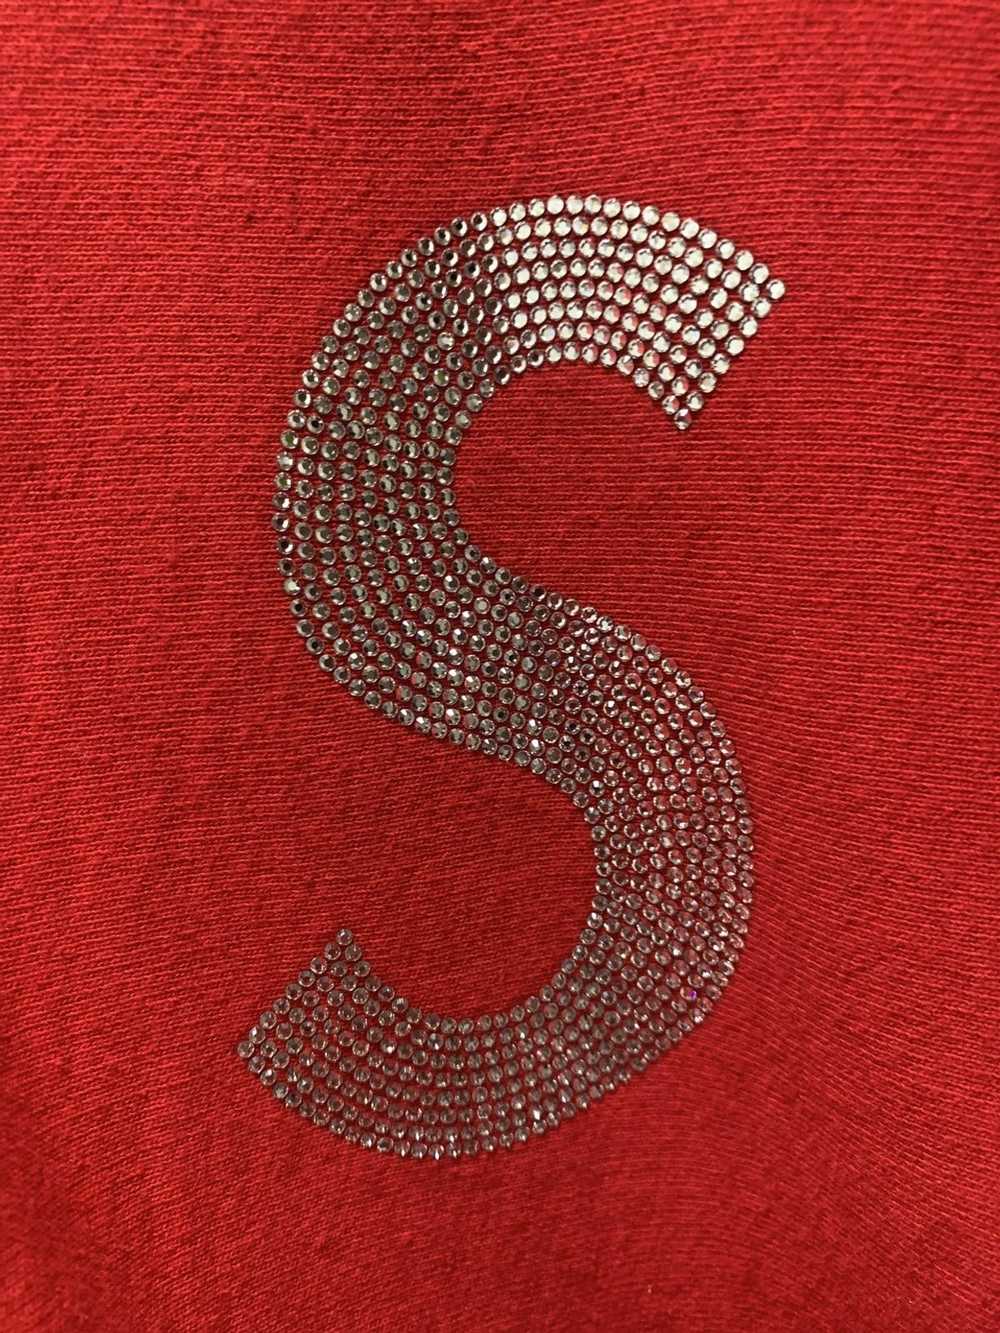 SUPREME Swarovski S Logo Hoodie RED